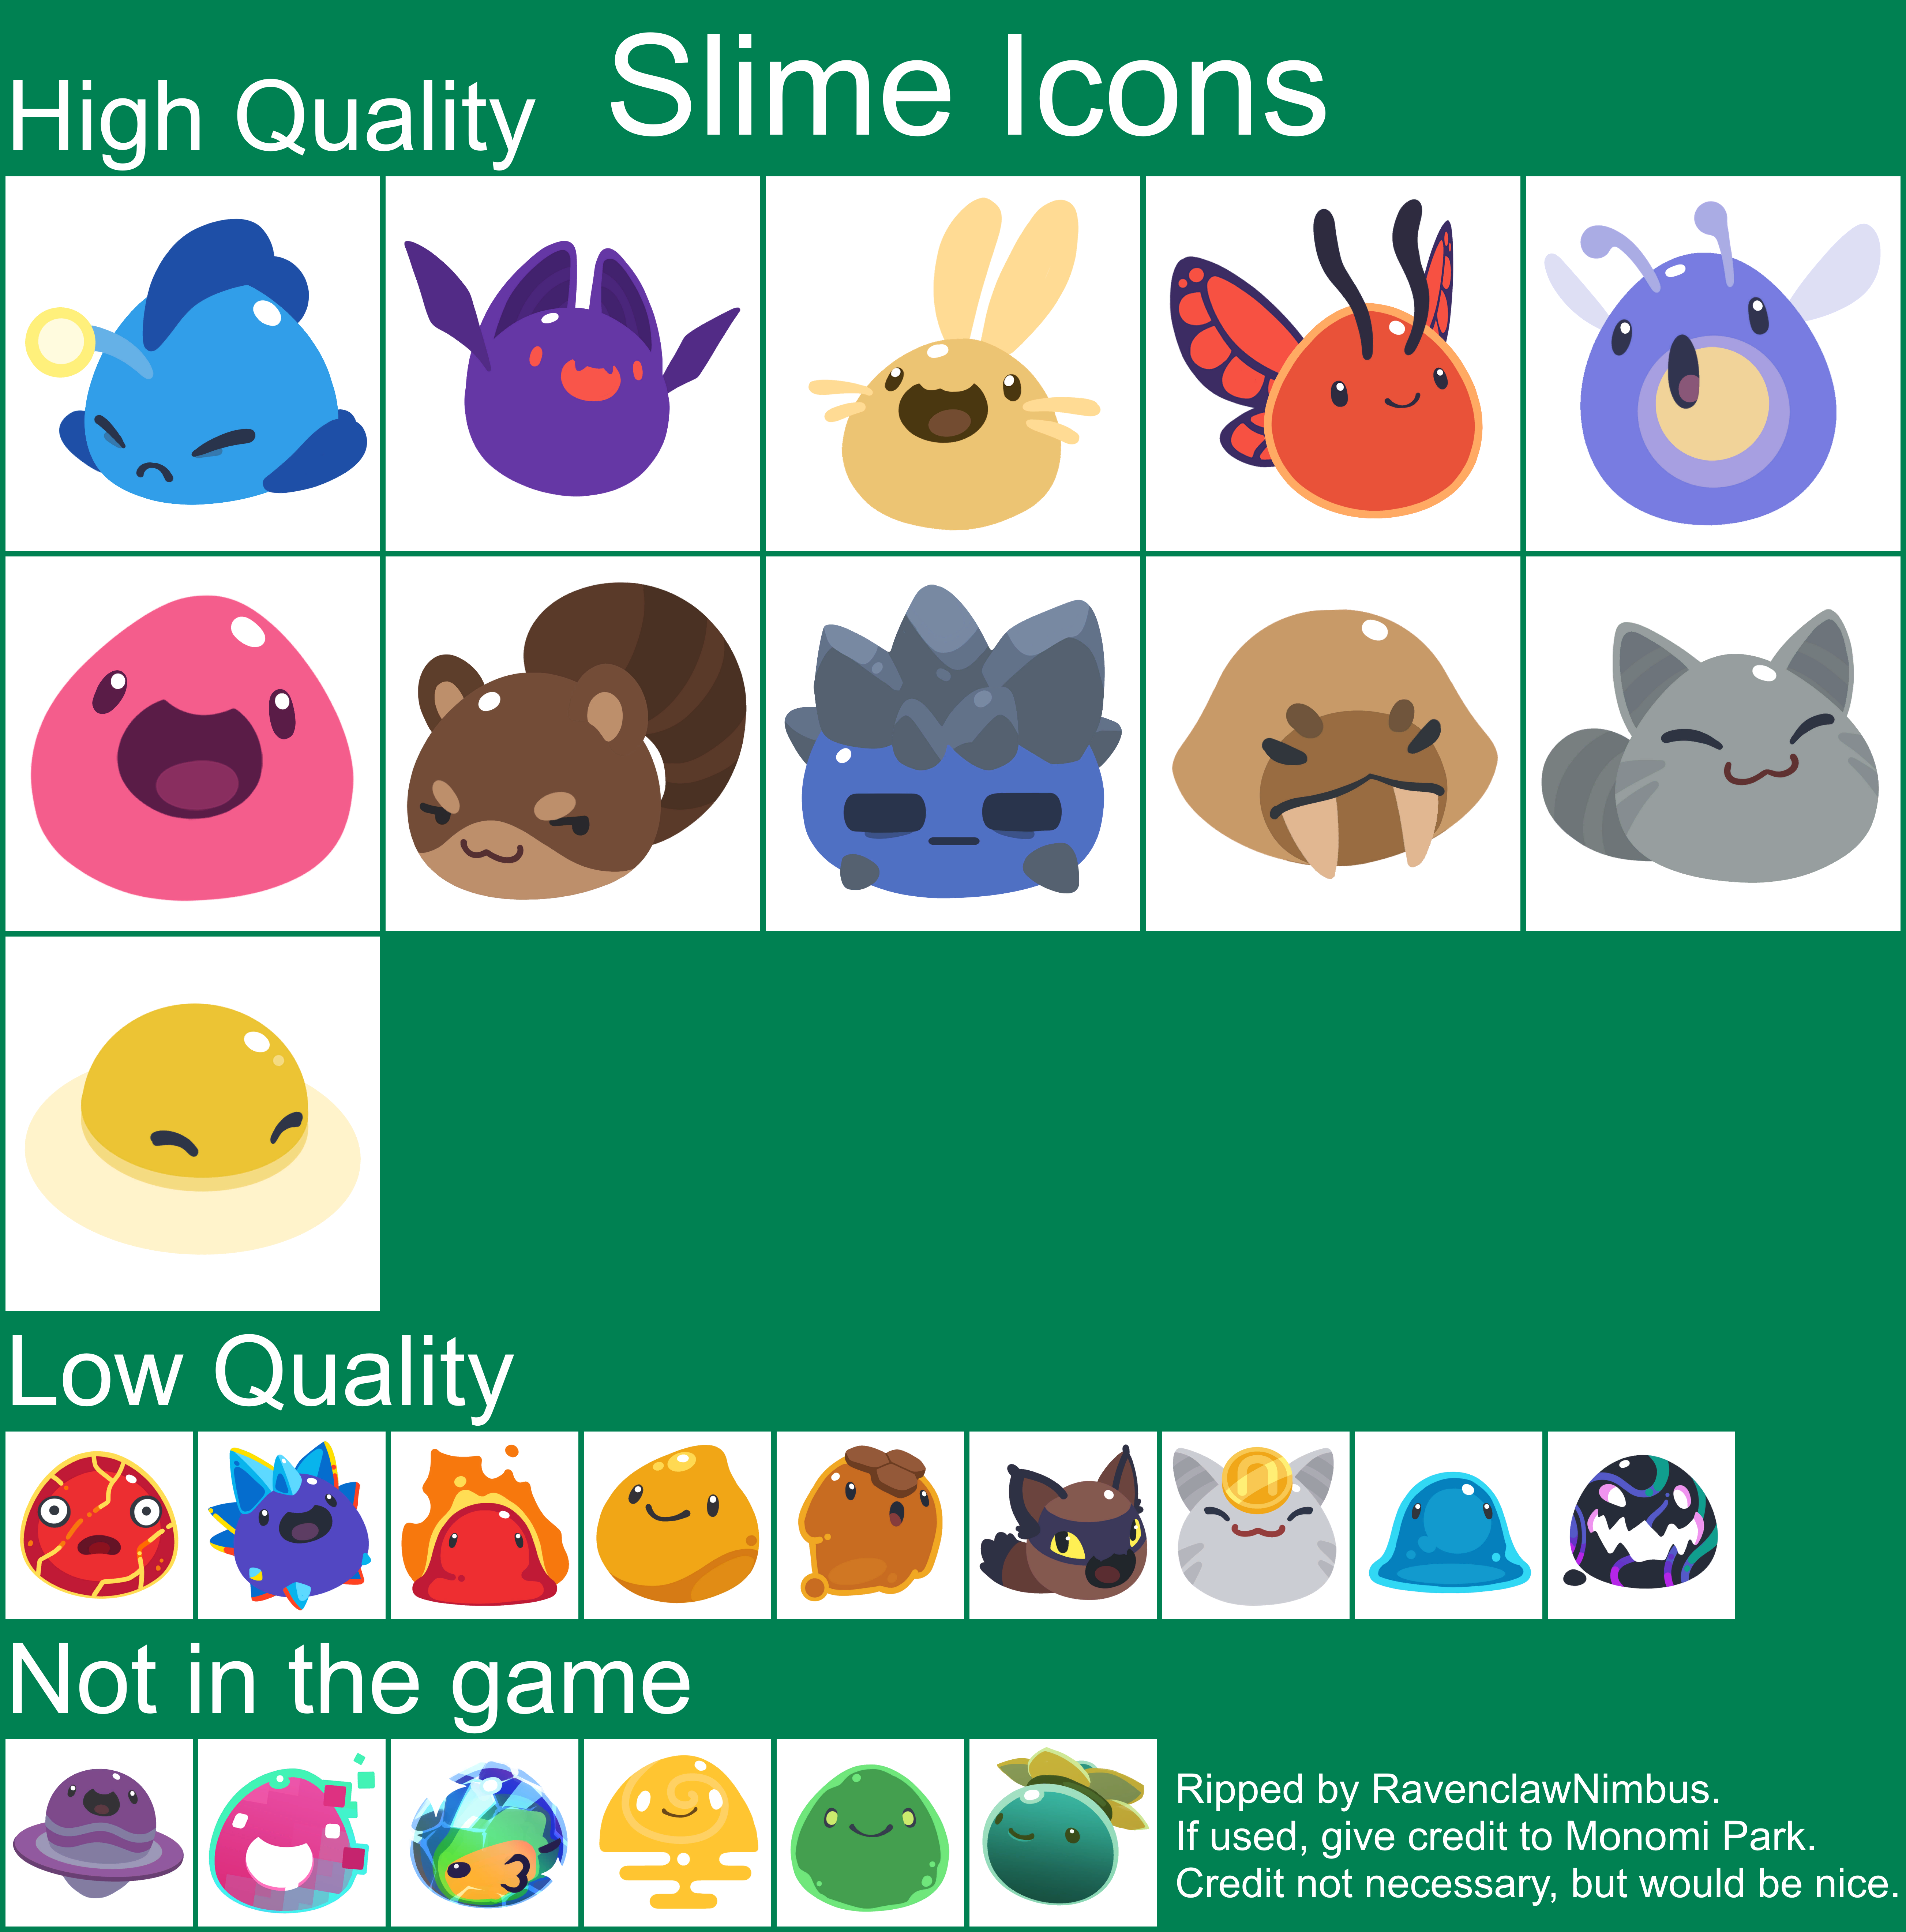 Slime Rancher 2 - Slime Icons